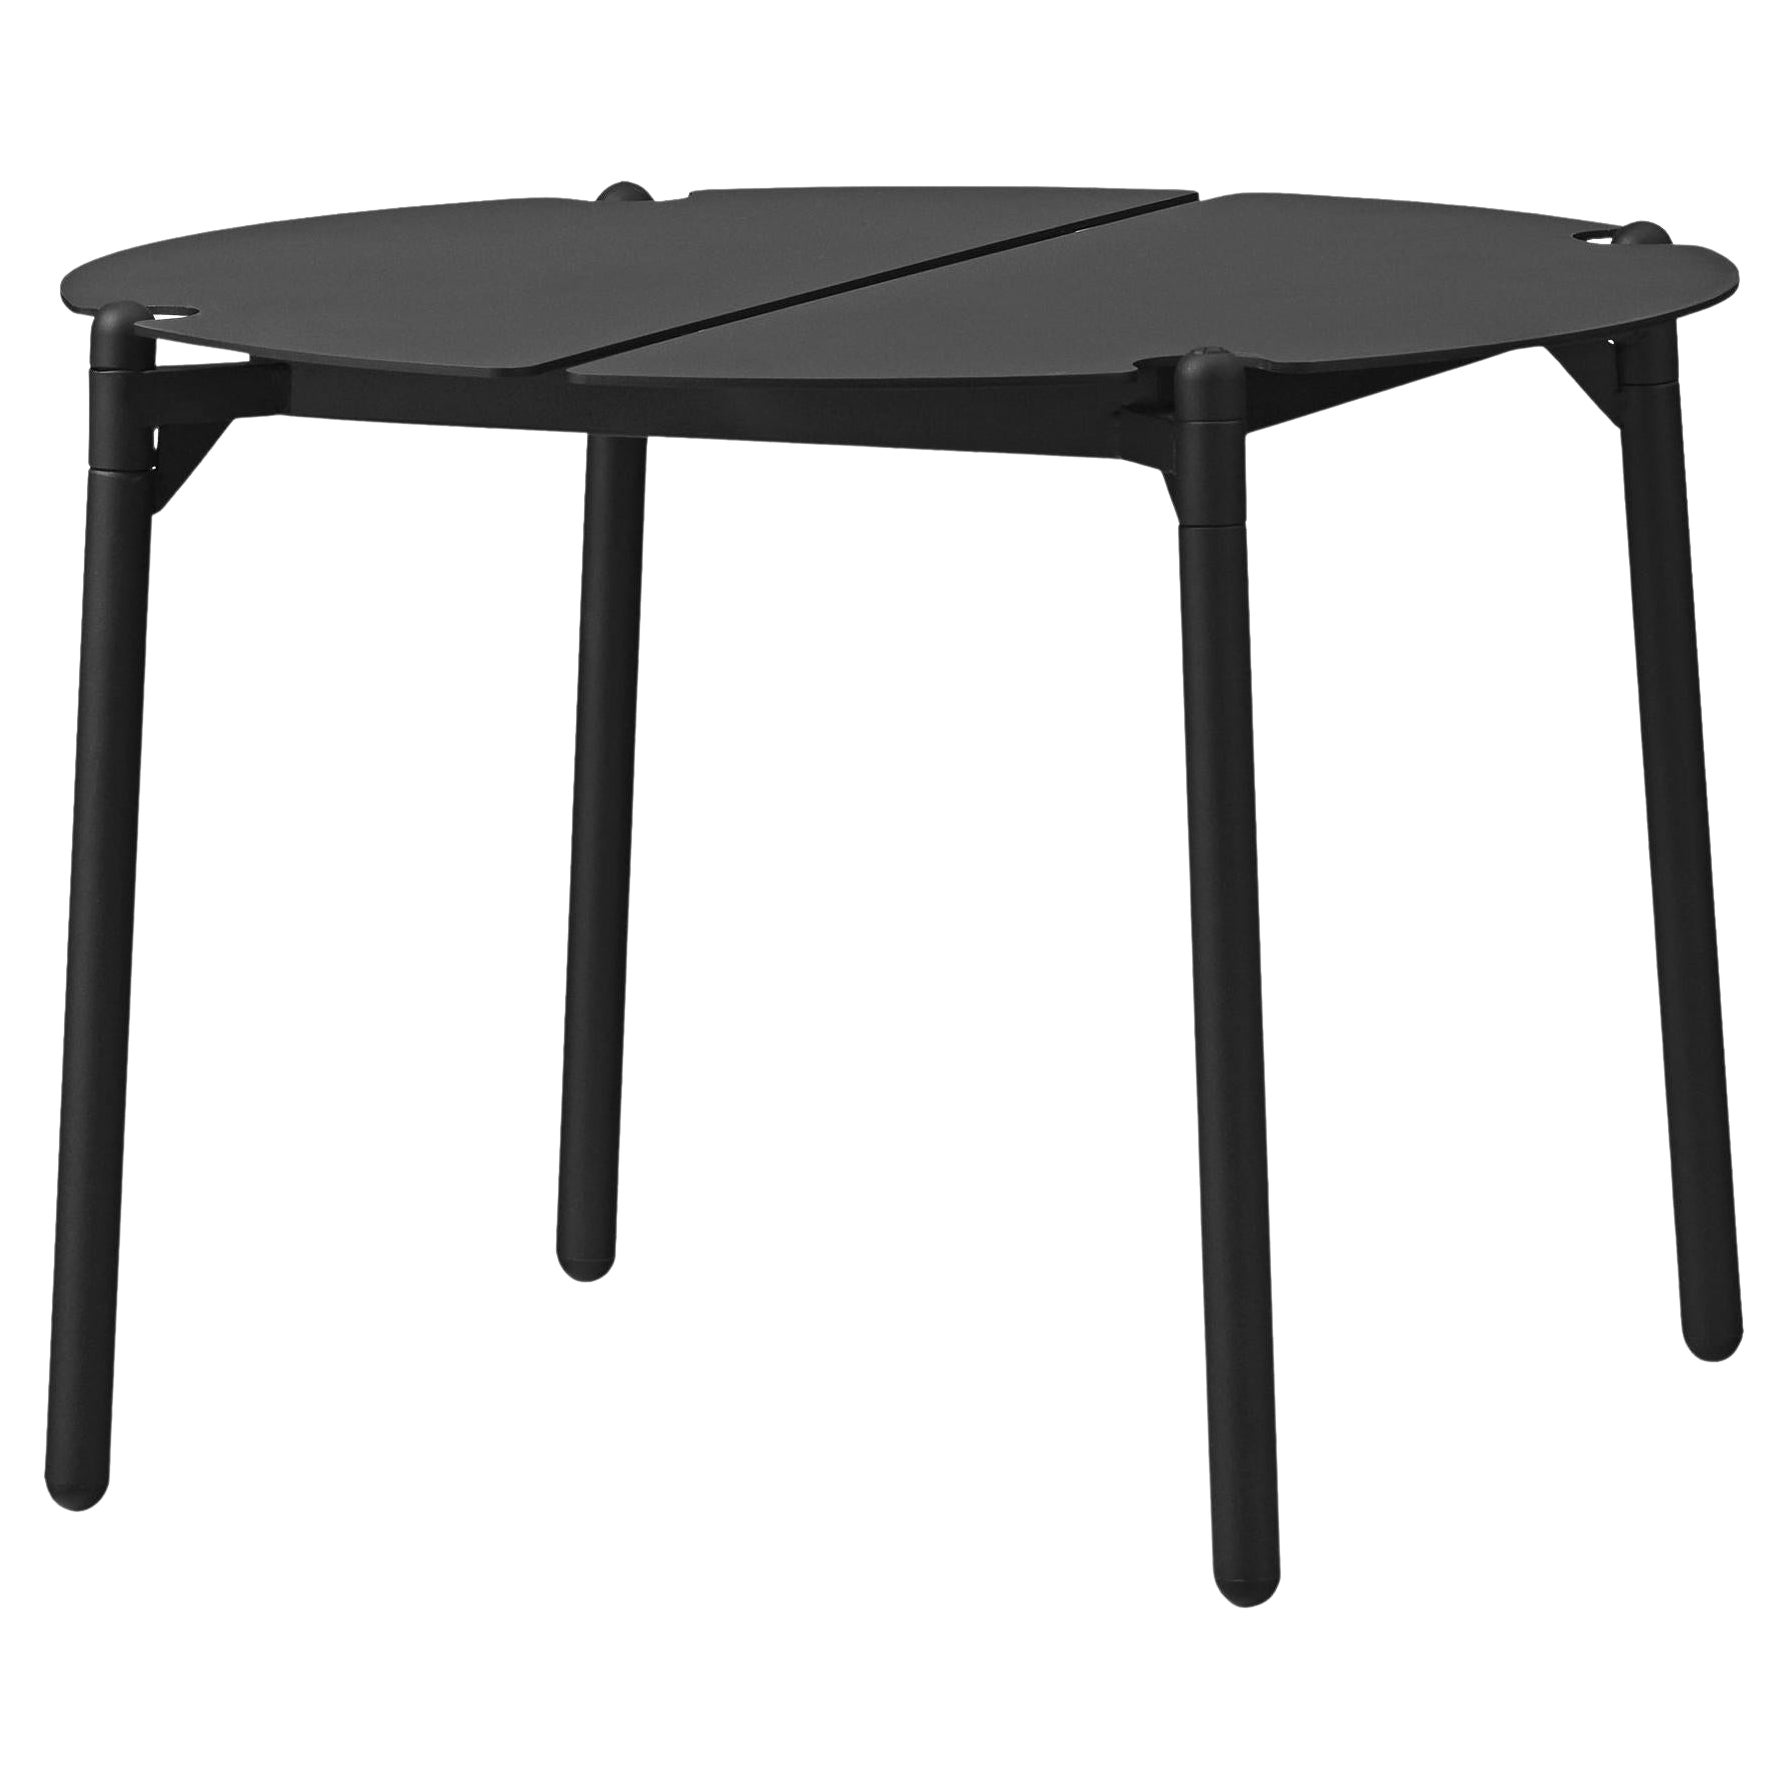 Petite table de salon minimaliste noire